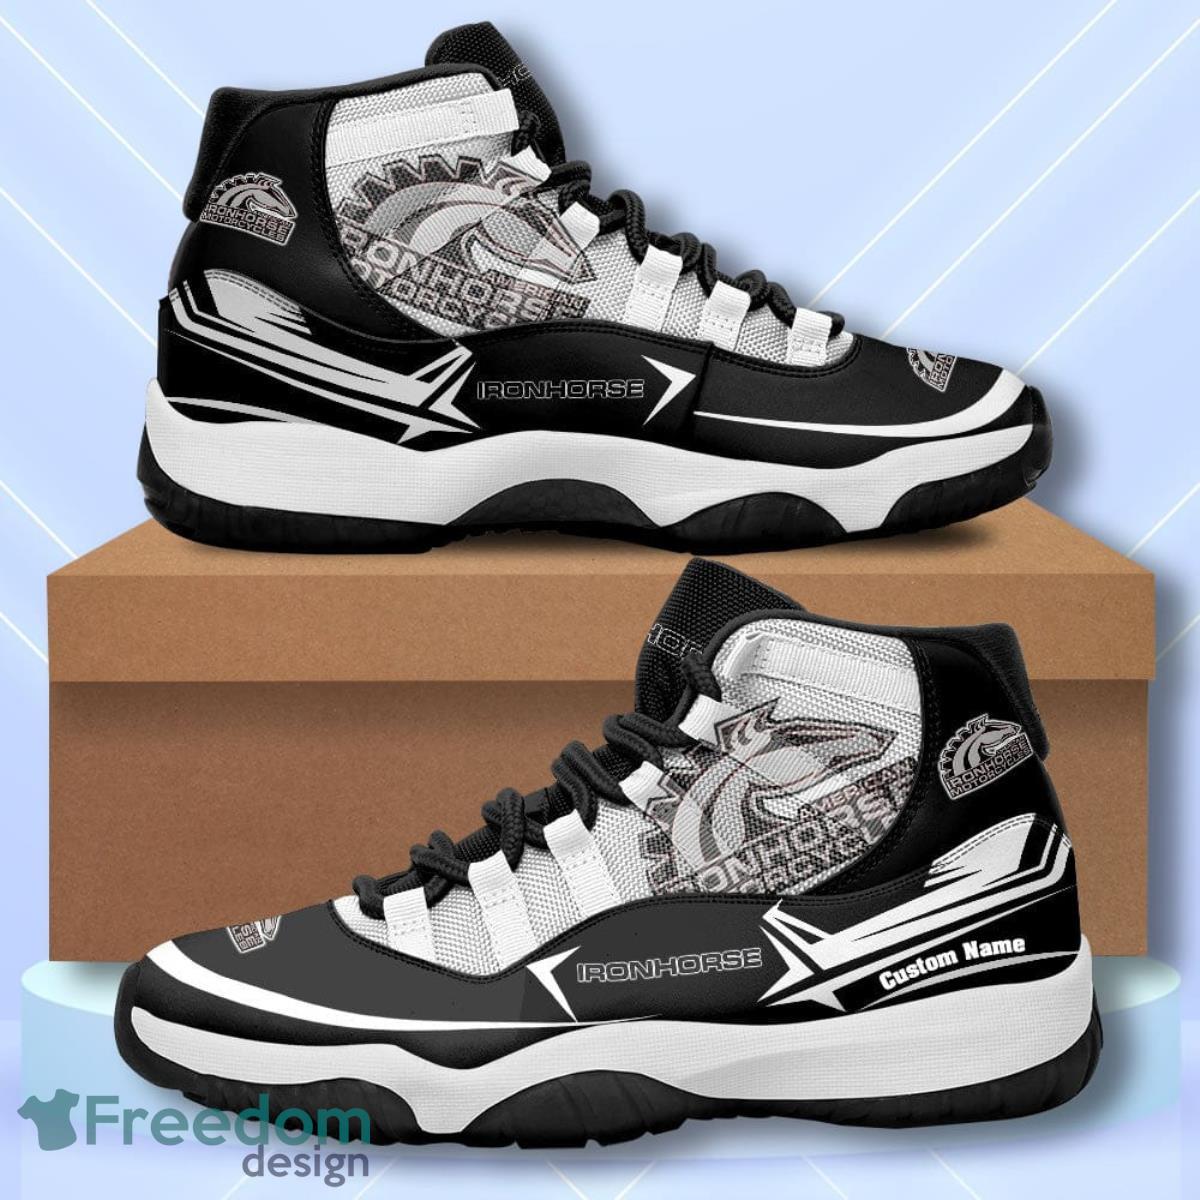 America IronHorse Custom Name Air Jordan 11  Sneakers Vintage Shoes Product Photo 1